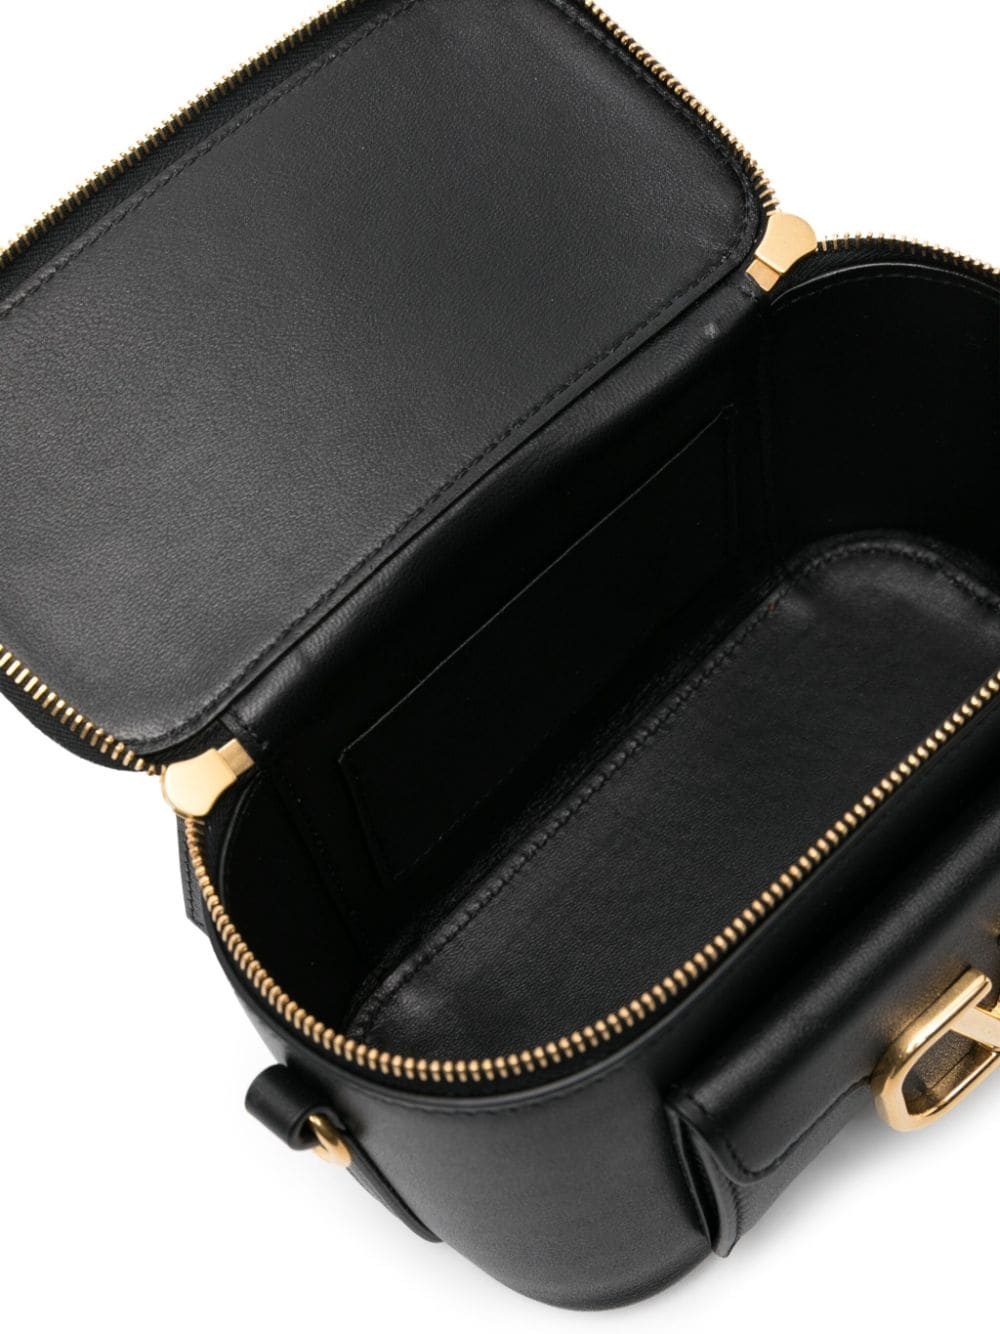 VLogo Signature leather mini bag - 5